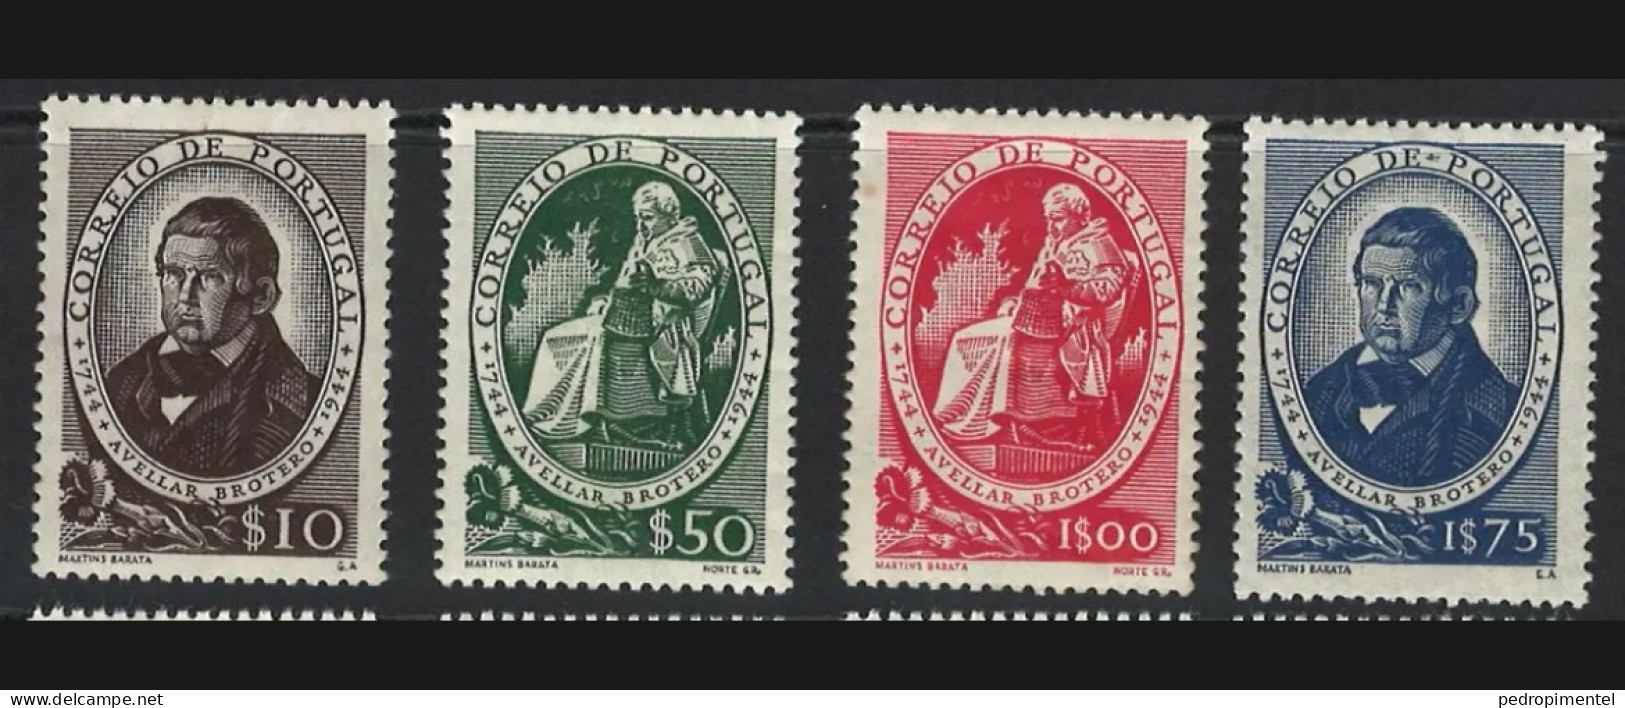 Portugal Stamps 1944 "Felix Avelar Botero" Condition MH OG #640-643 - Nuevos